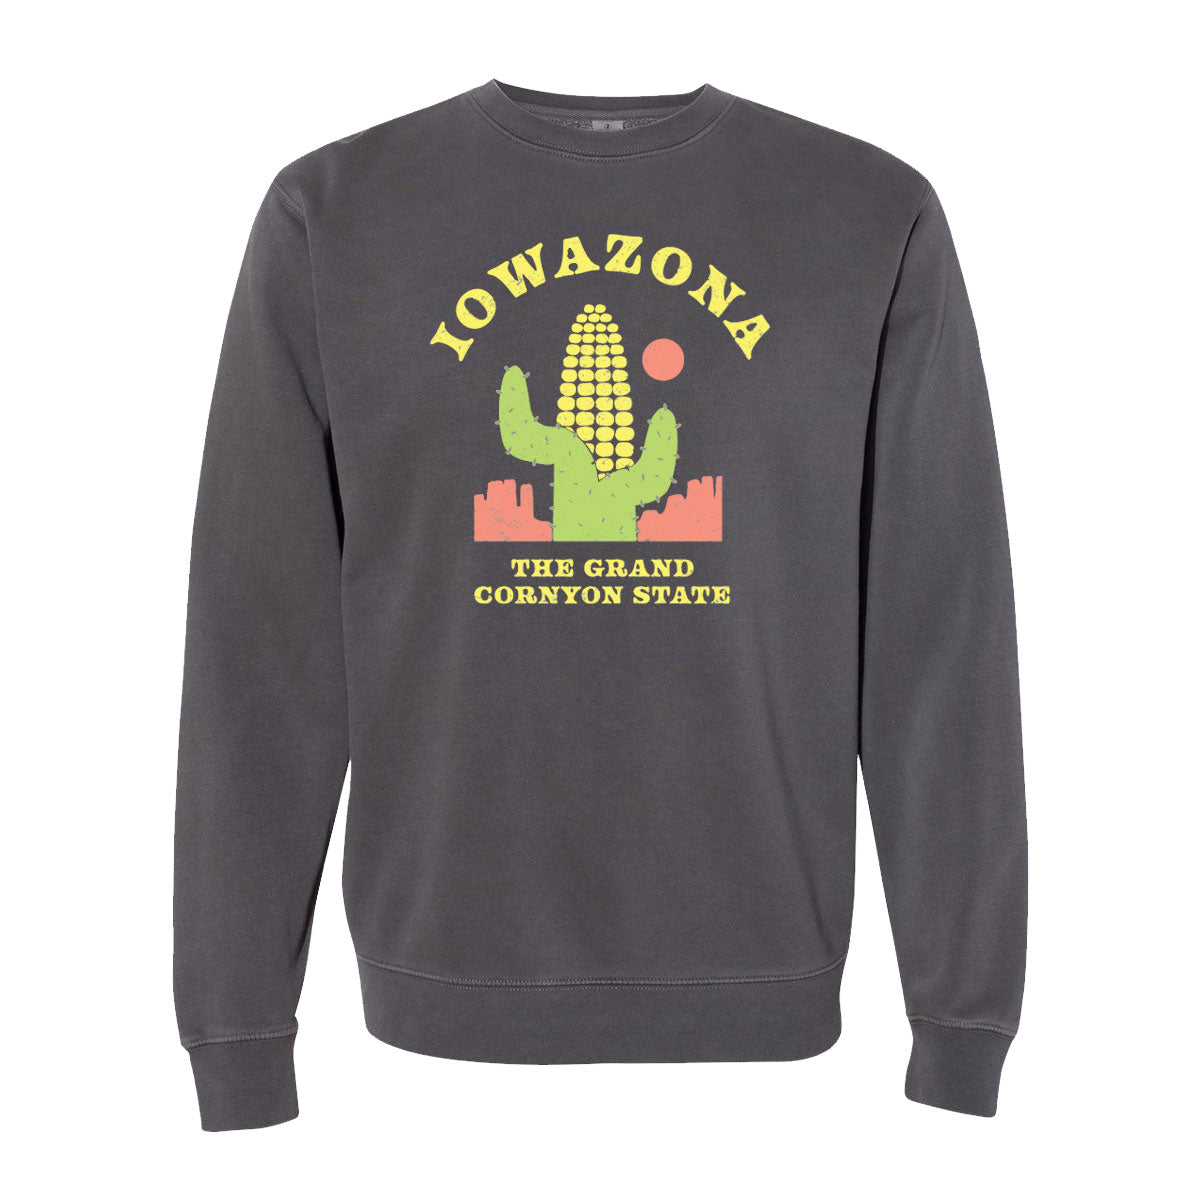 Iowazona Crew Neck Sweatshirt - Bozz Prints